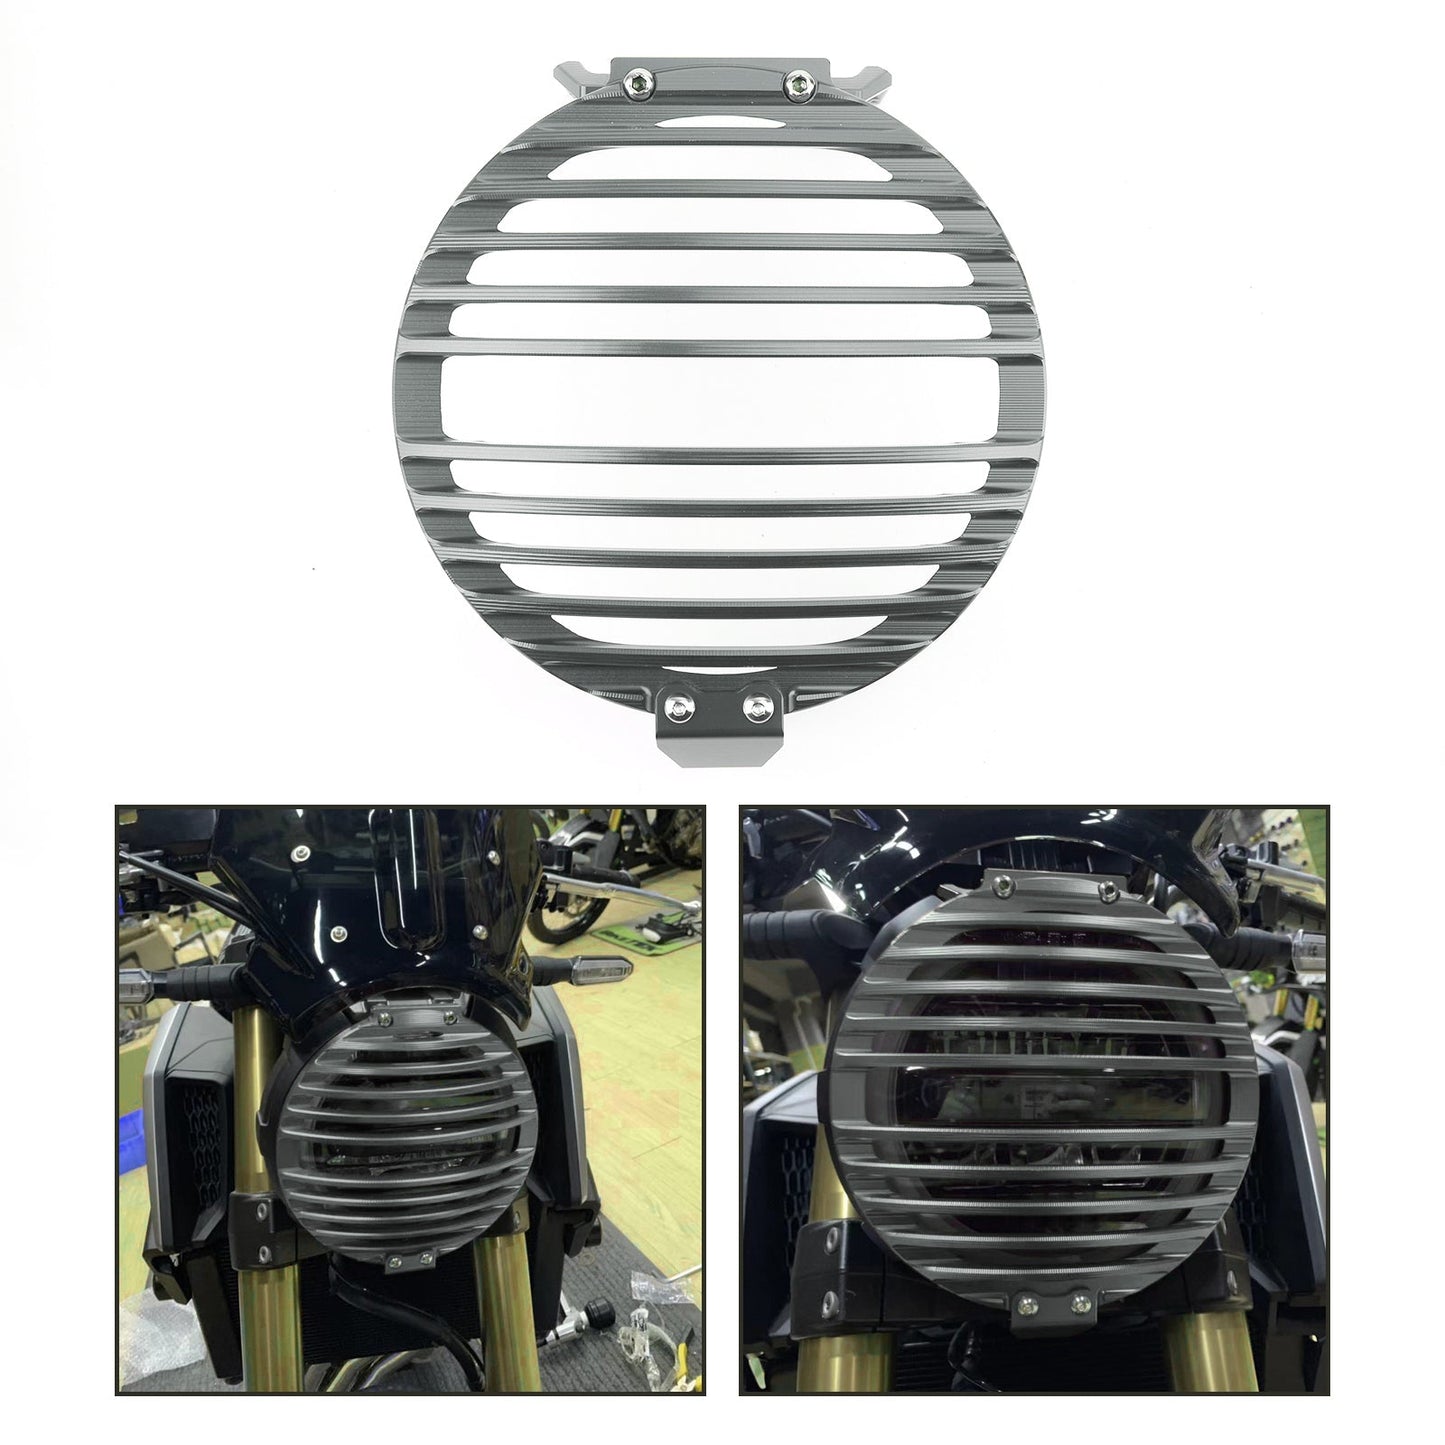 CNC Aluminum Headlight Guard Cover Protector Black for Honda CB650R 2019-2020